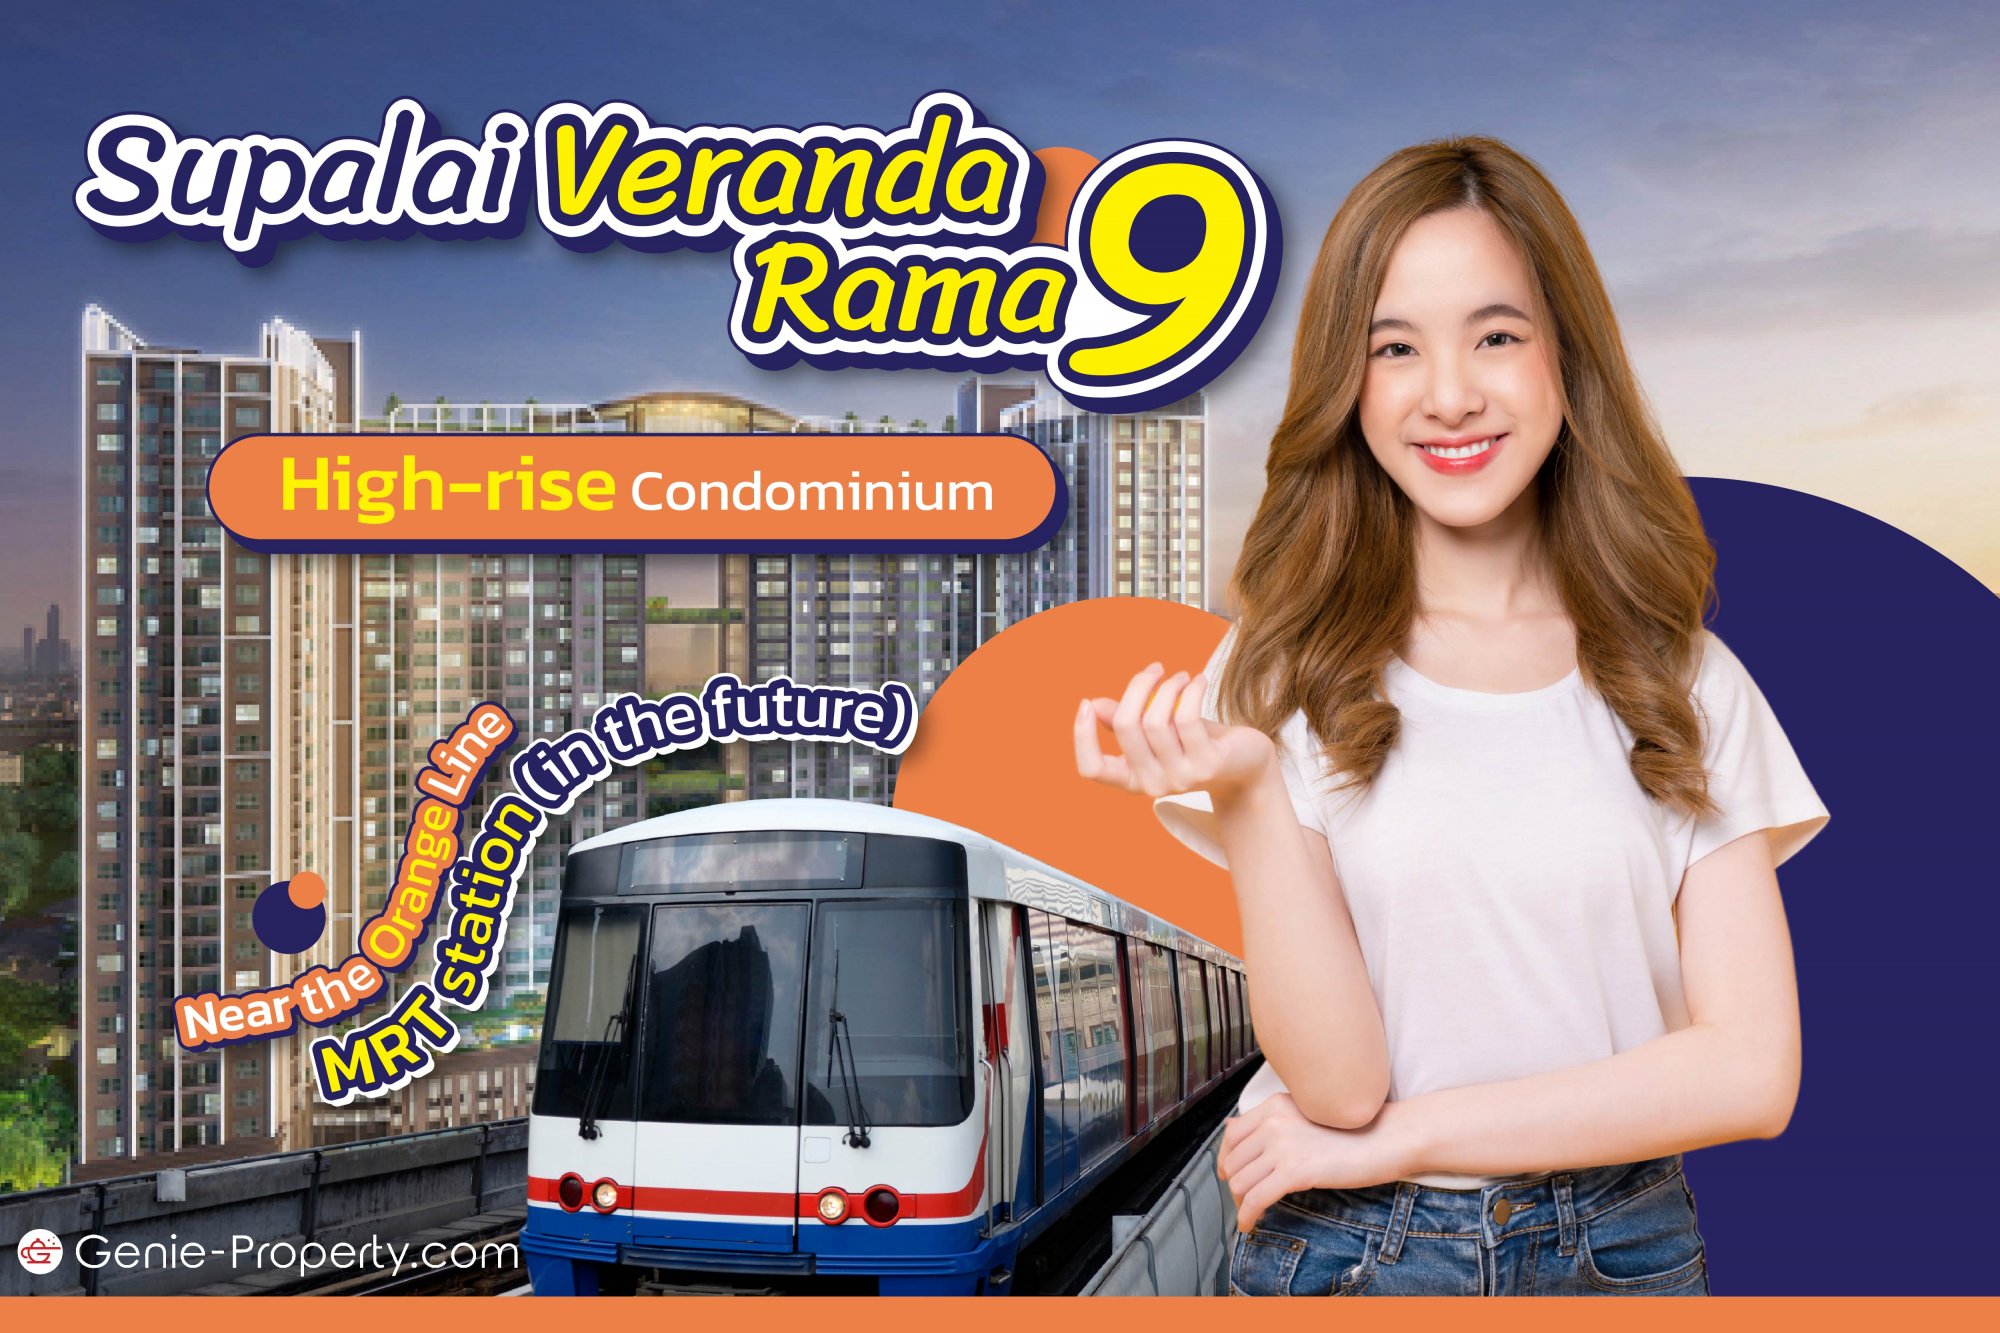 image for Supalai Veranda Rama 9 High-rise Condominium Near the Orange Line MRT station (in the future)